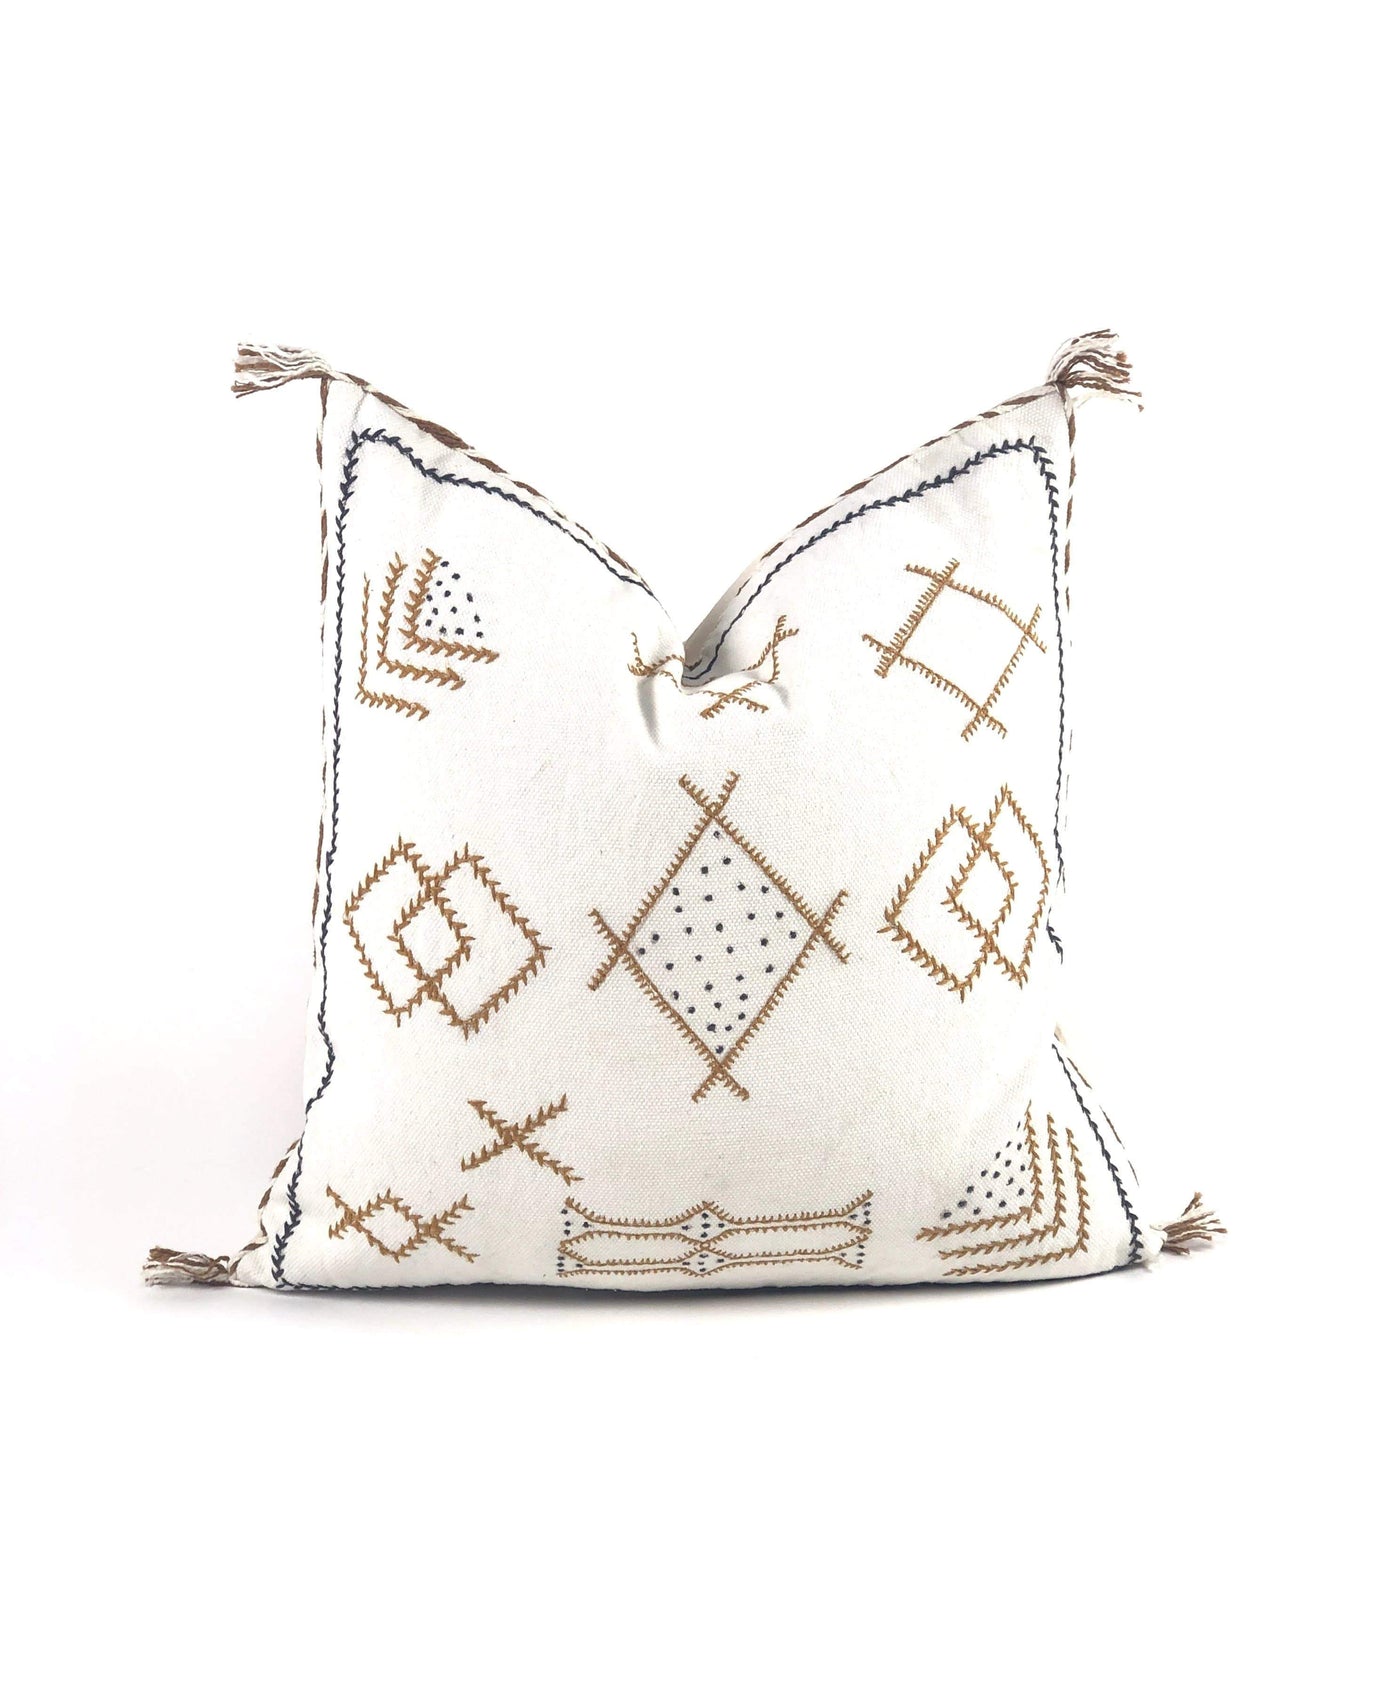 Bryar Wolf Handmade Decorative Throw Pillows With Insert / 20" x 20" ANASH